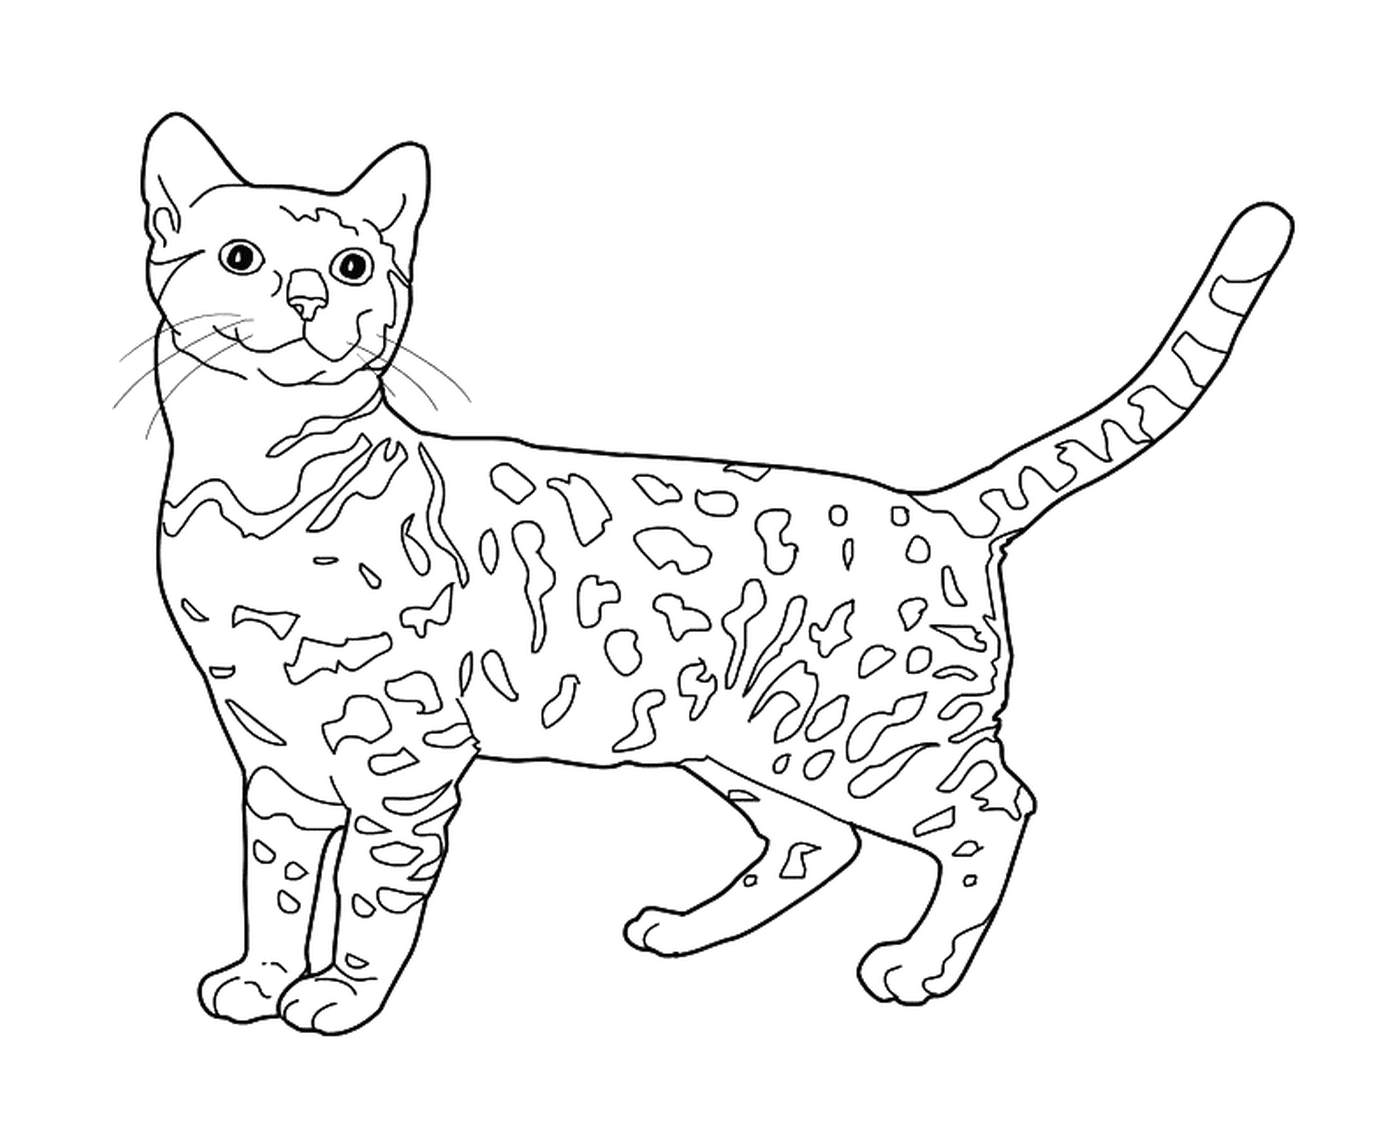  A Bengal, a cat that looks like a leopard 